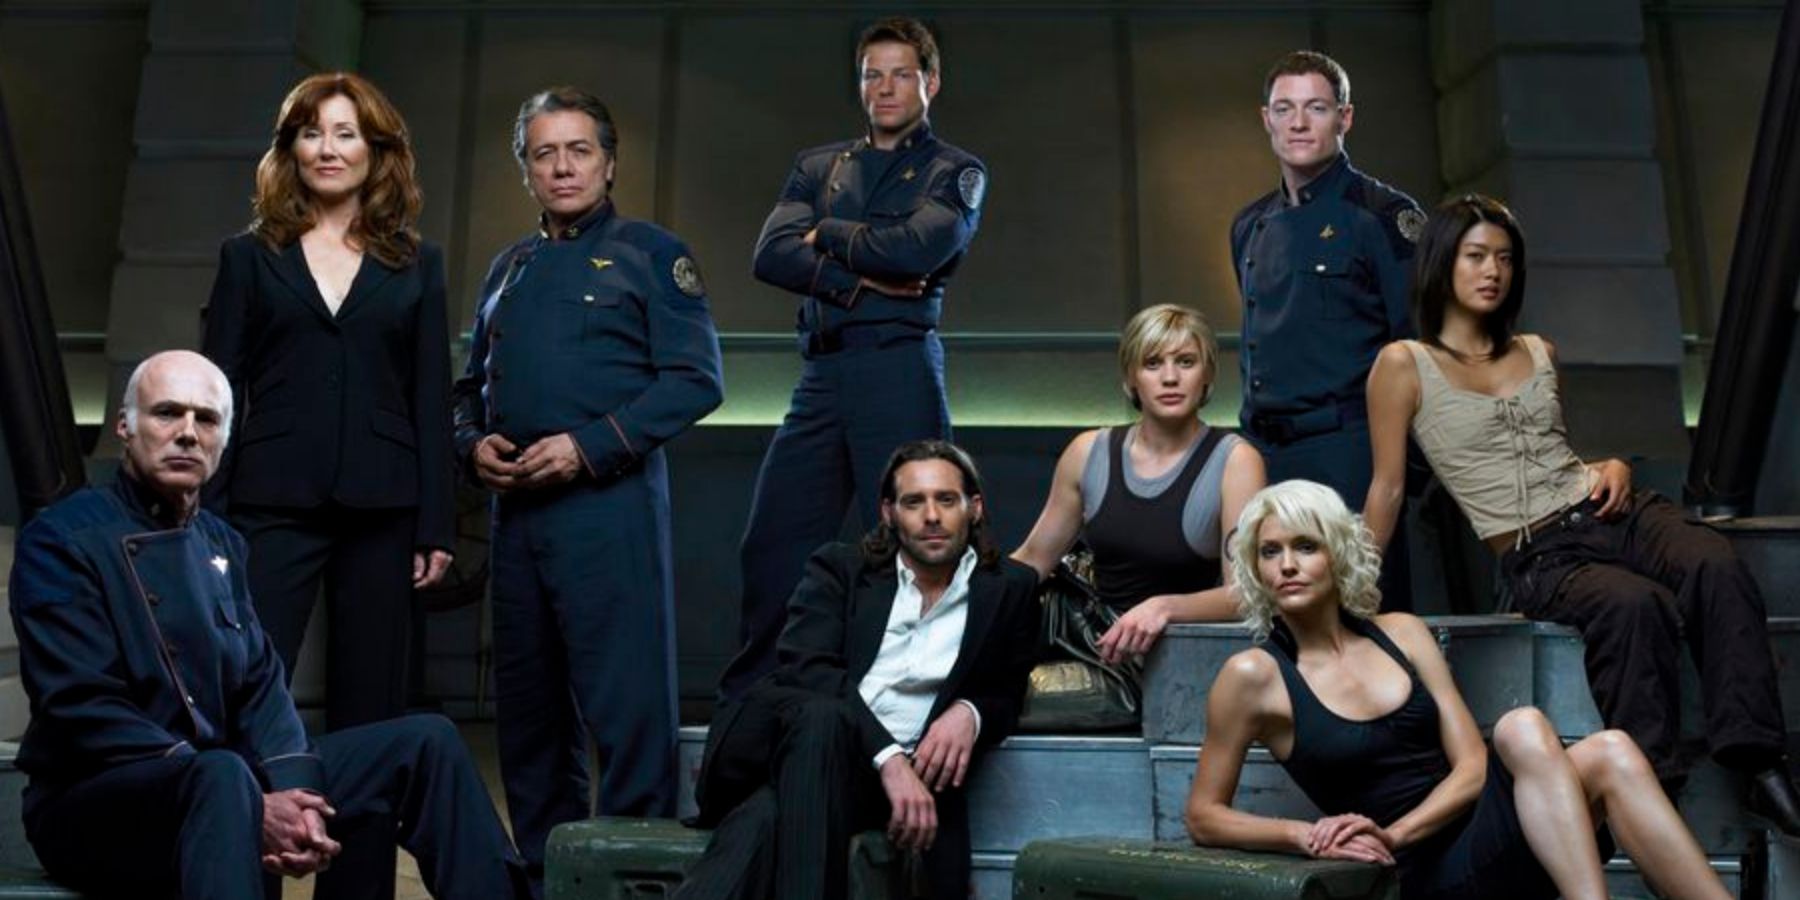 Battlestar Galactica Reboot Series Announced With Mr. Robot Creator